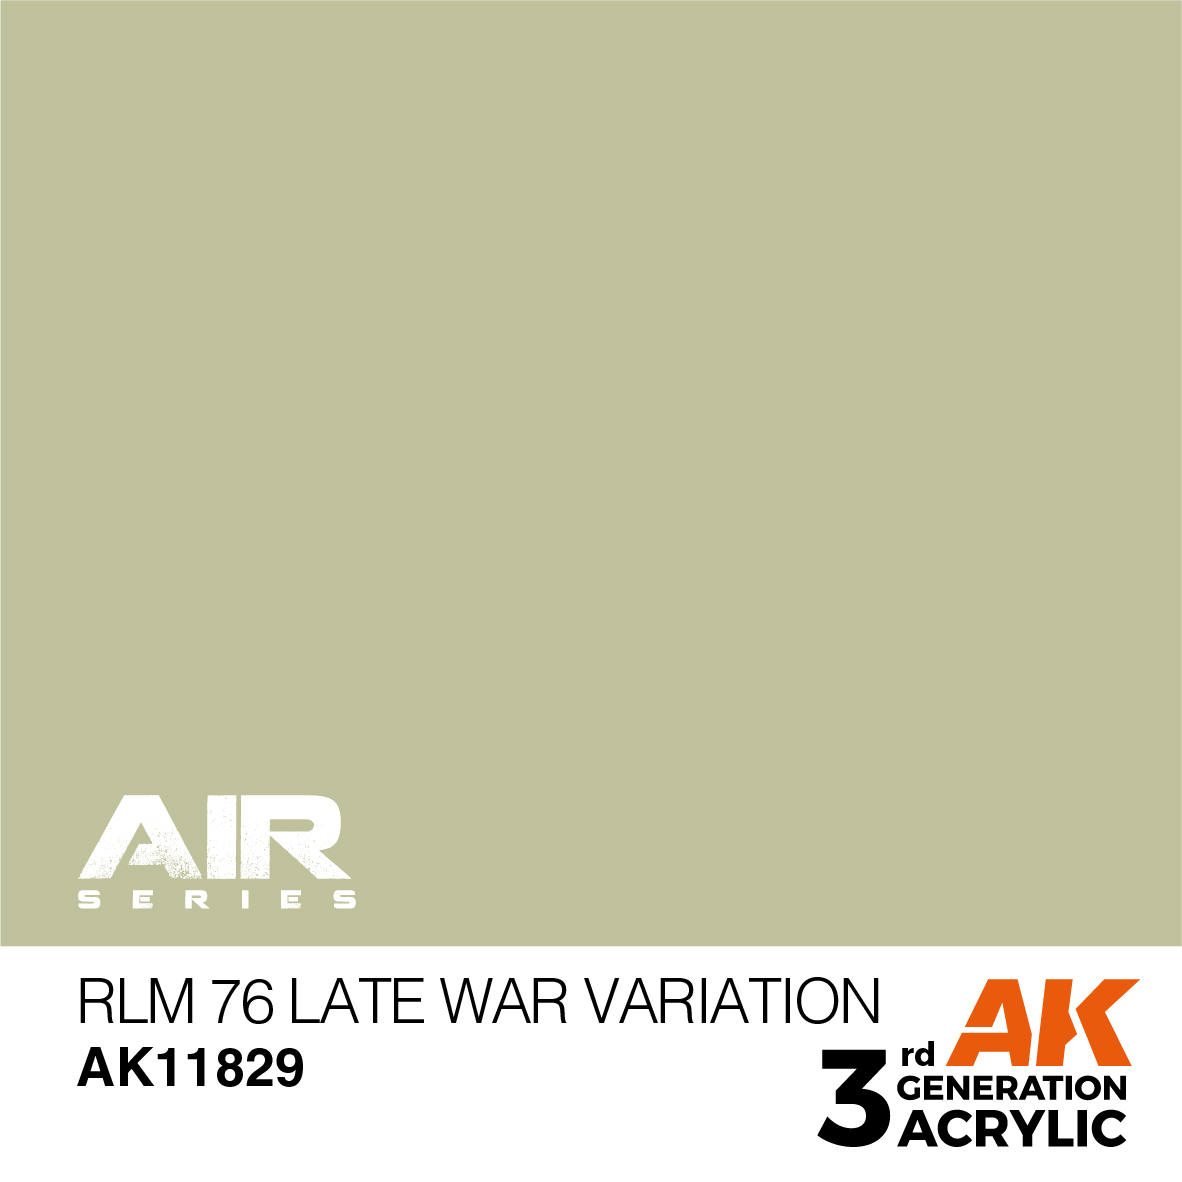 RLM 76 Late War Variation – AIR